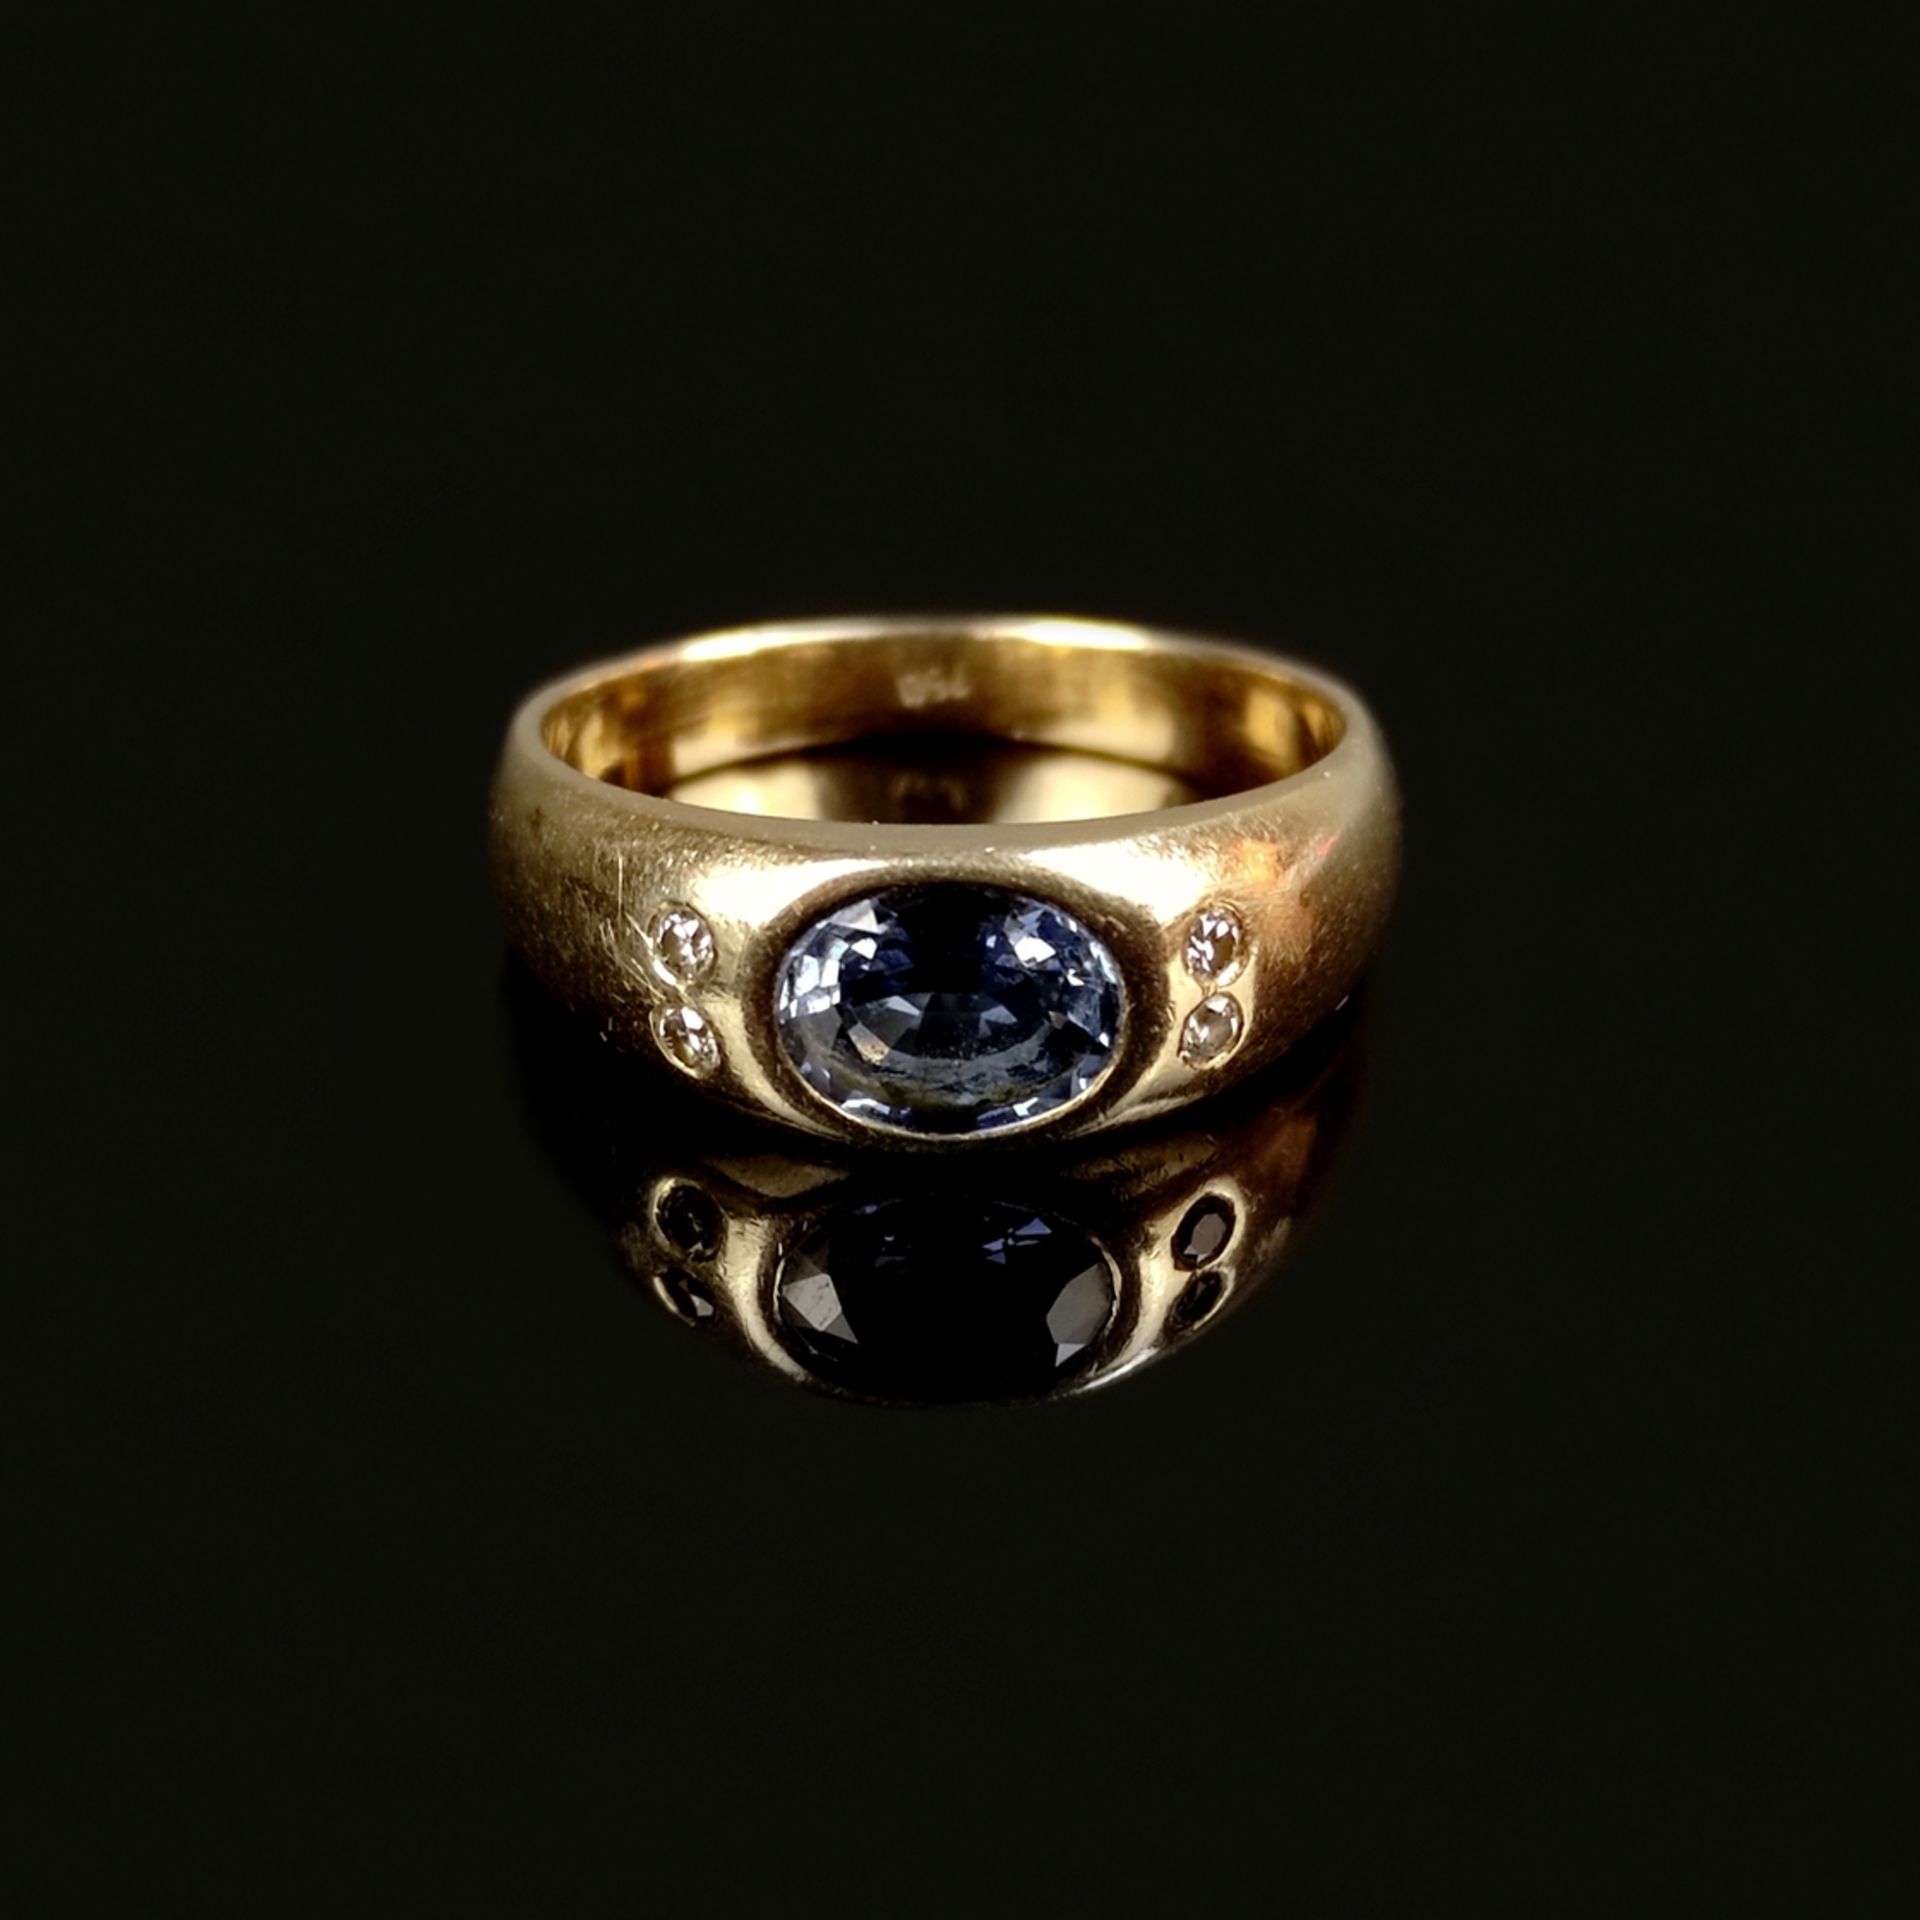 Aquamarin-Diamant-Ring, 750/18K Gelbgold (punziert), 4,98g, mittig oval facettierter Aquamarin, lin - Bild 2 aus 3